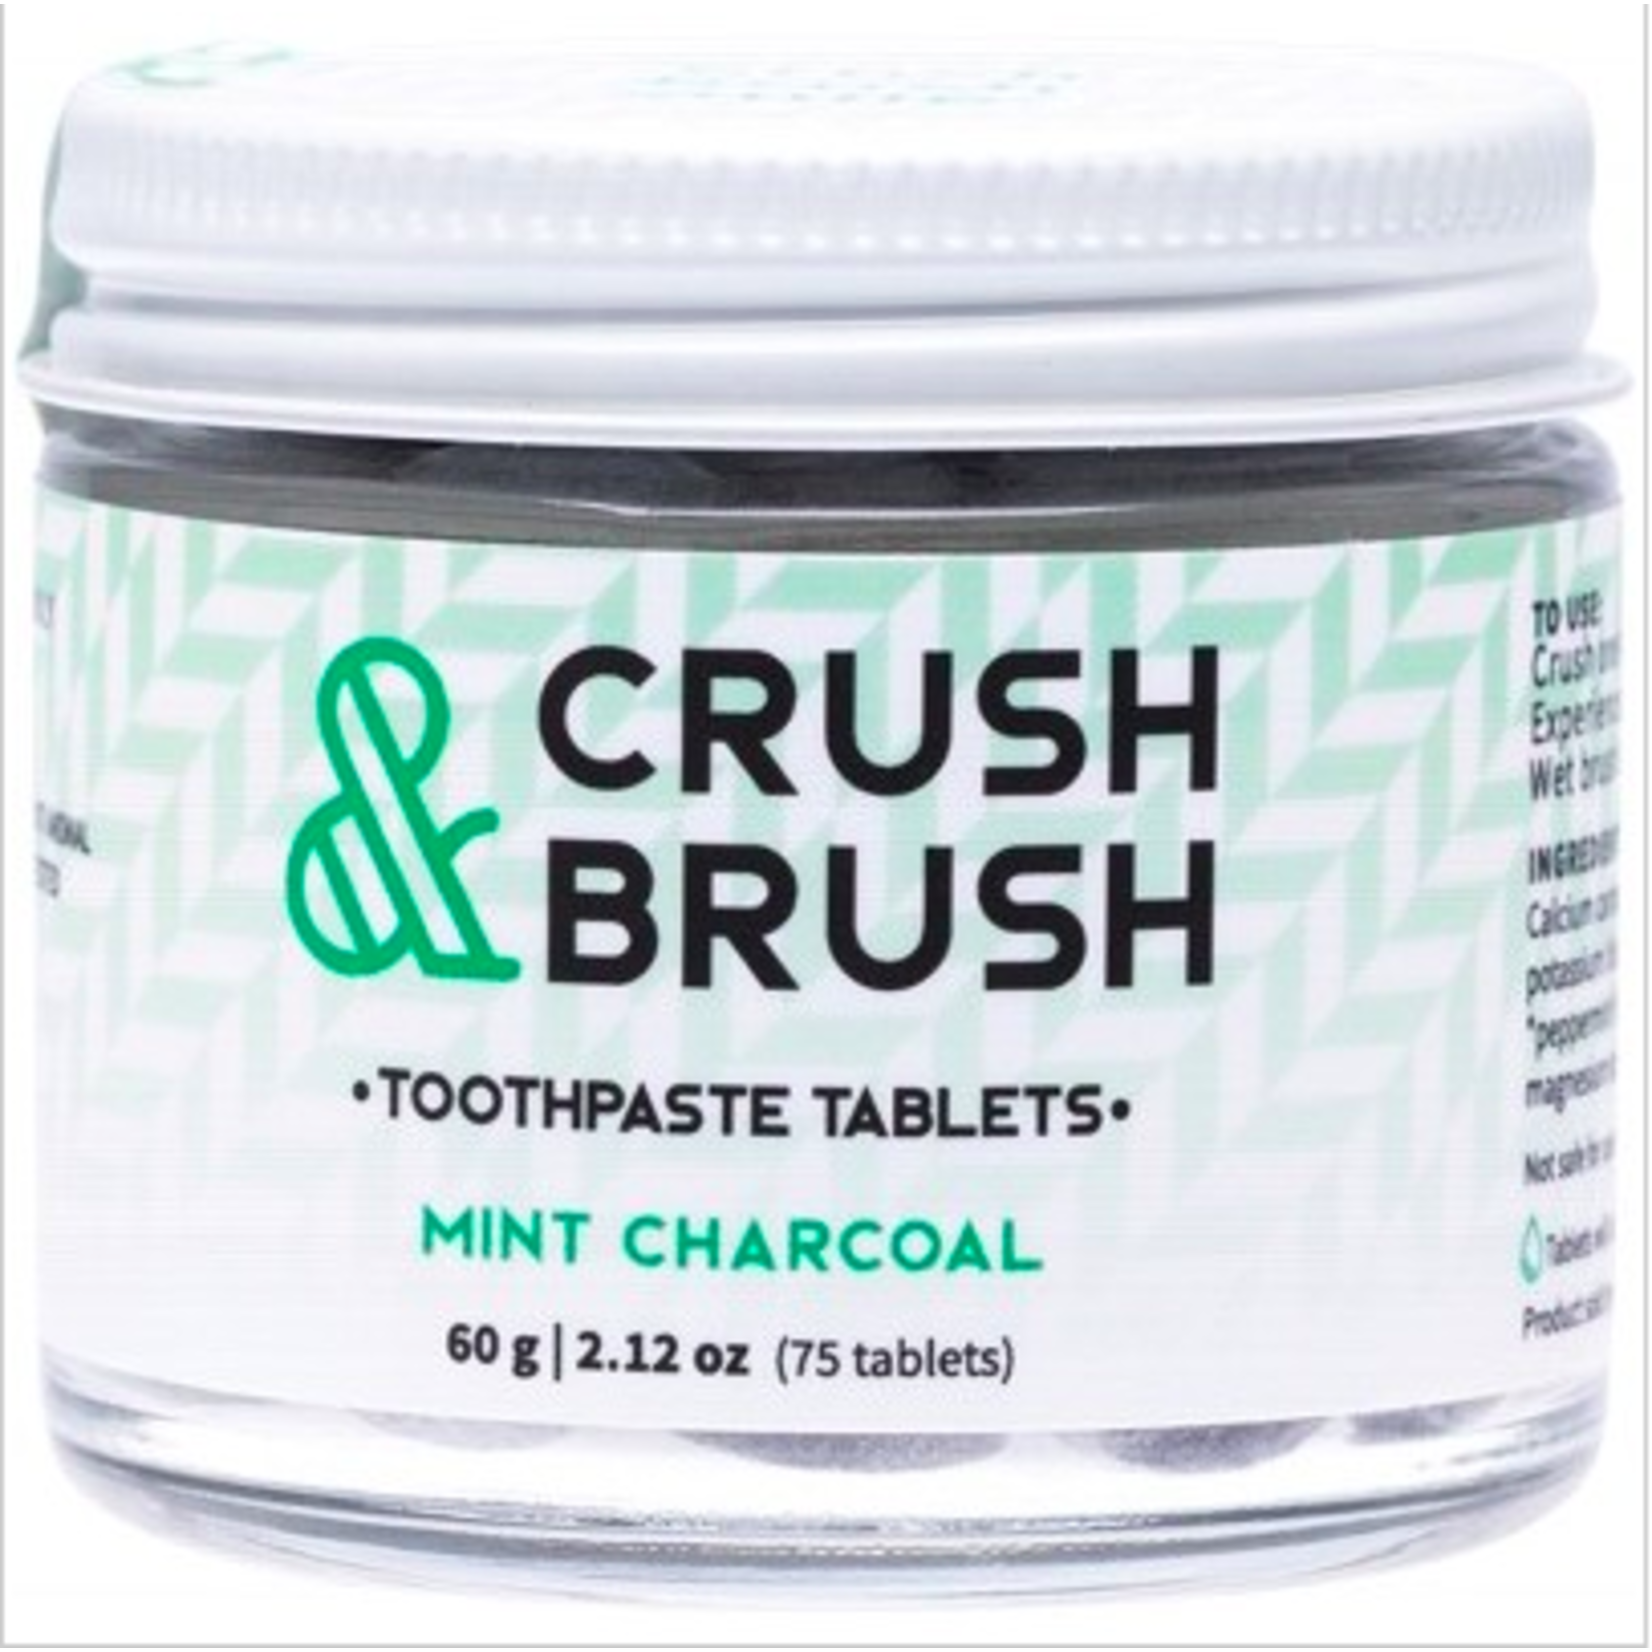 Nelson Nelson Naturals Crush-Brush Toothpaste